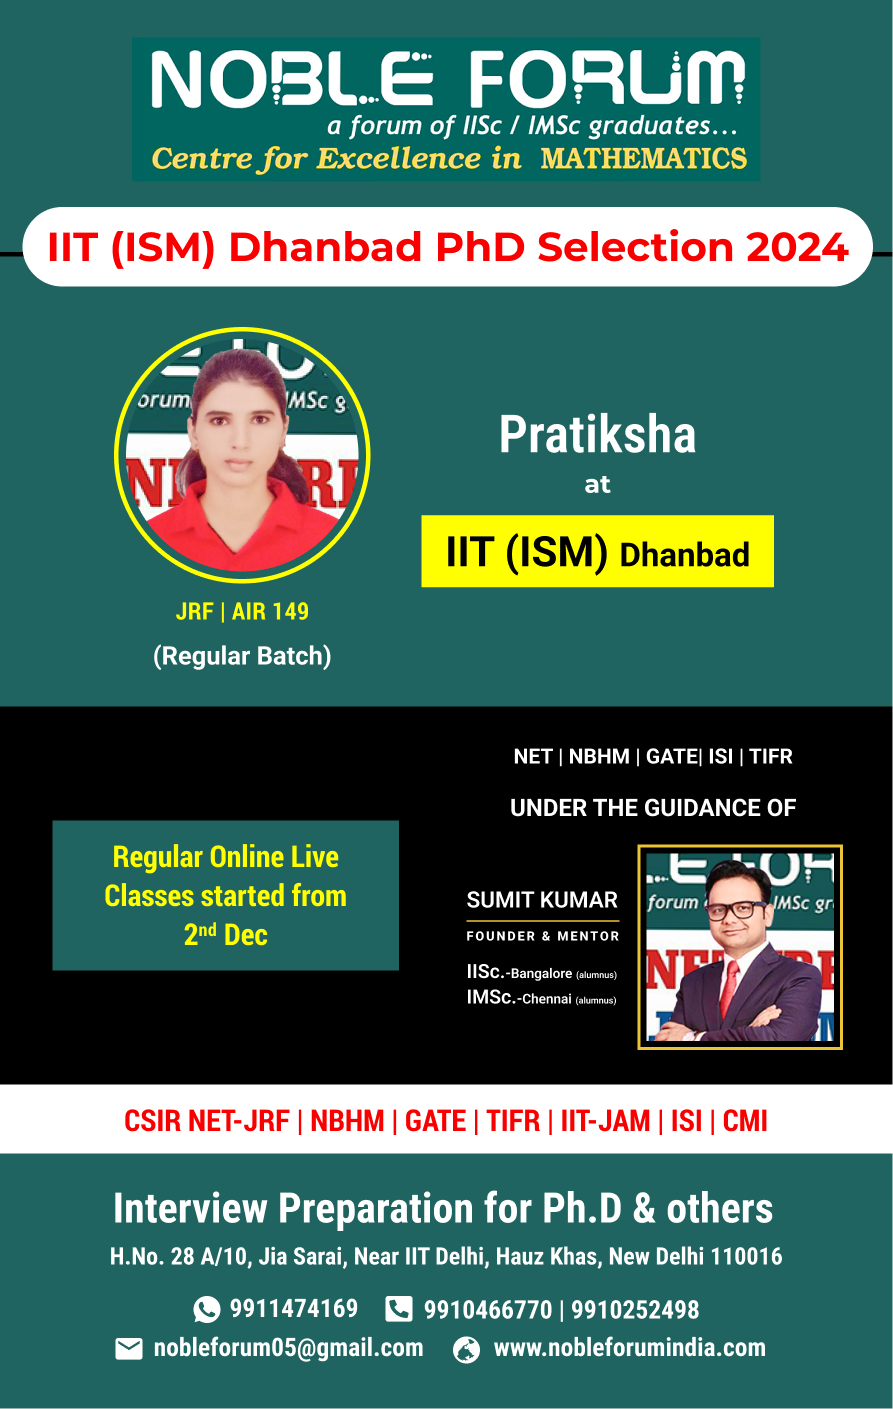 Pratiksha-IIT (ISM) Dhanbad 2024